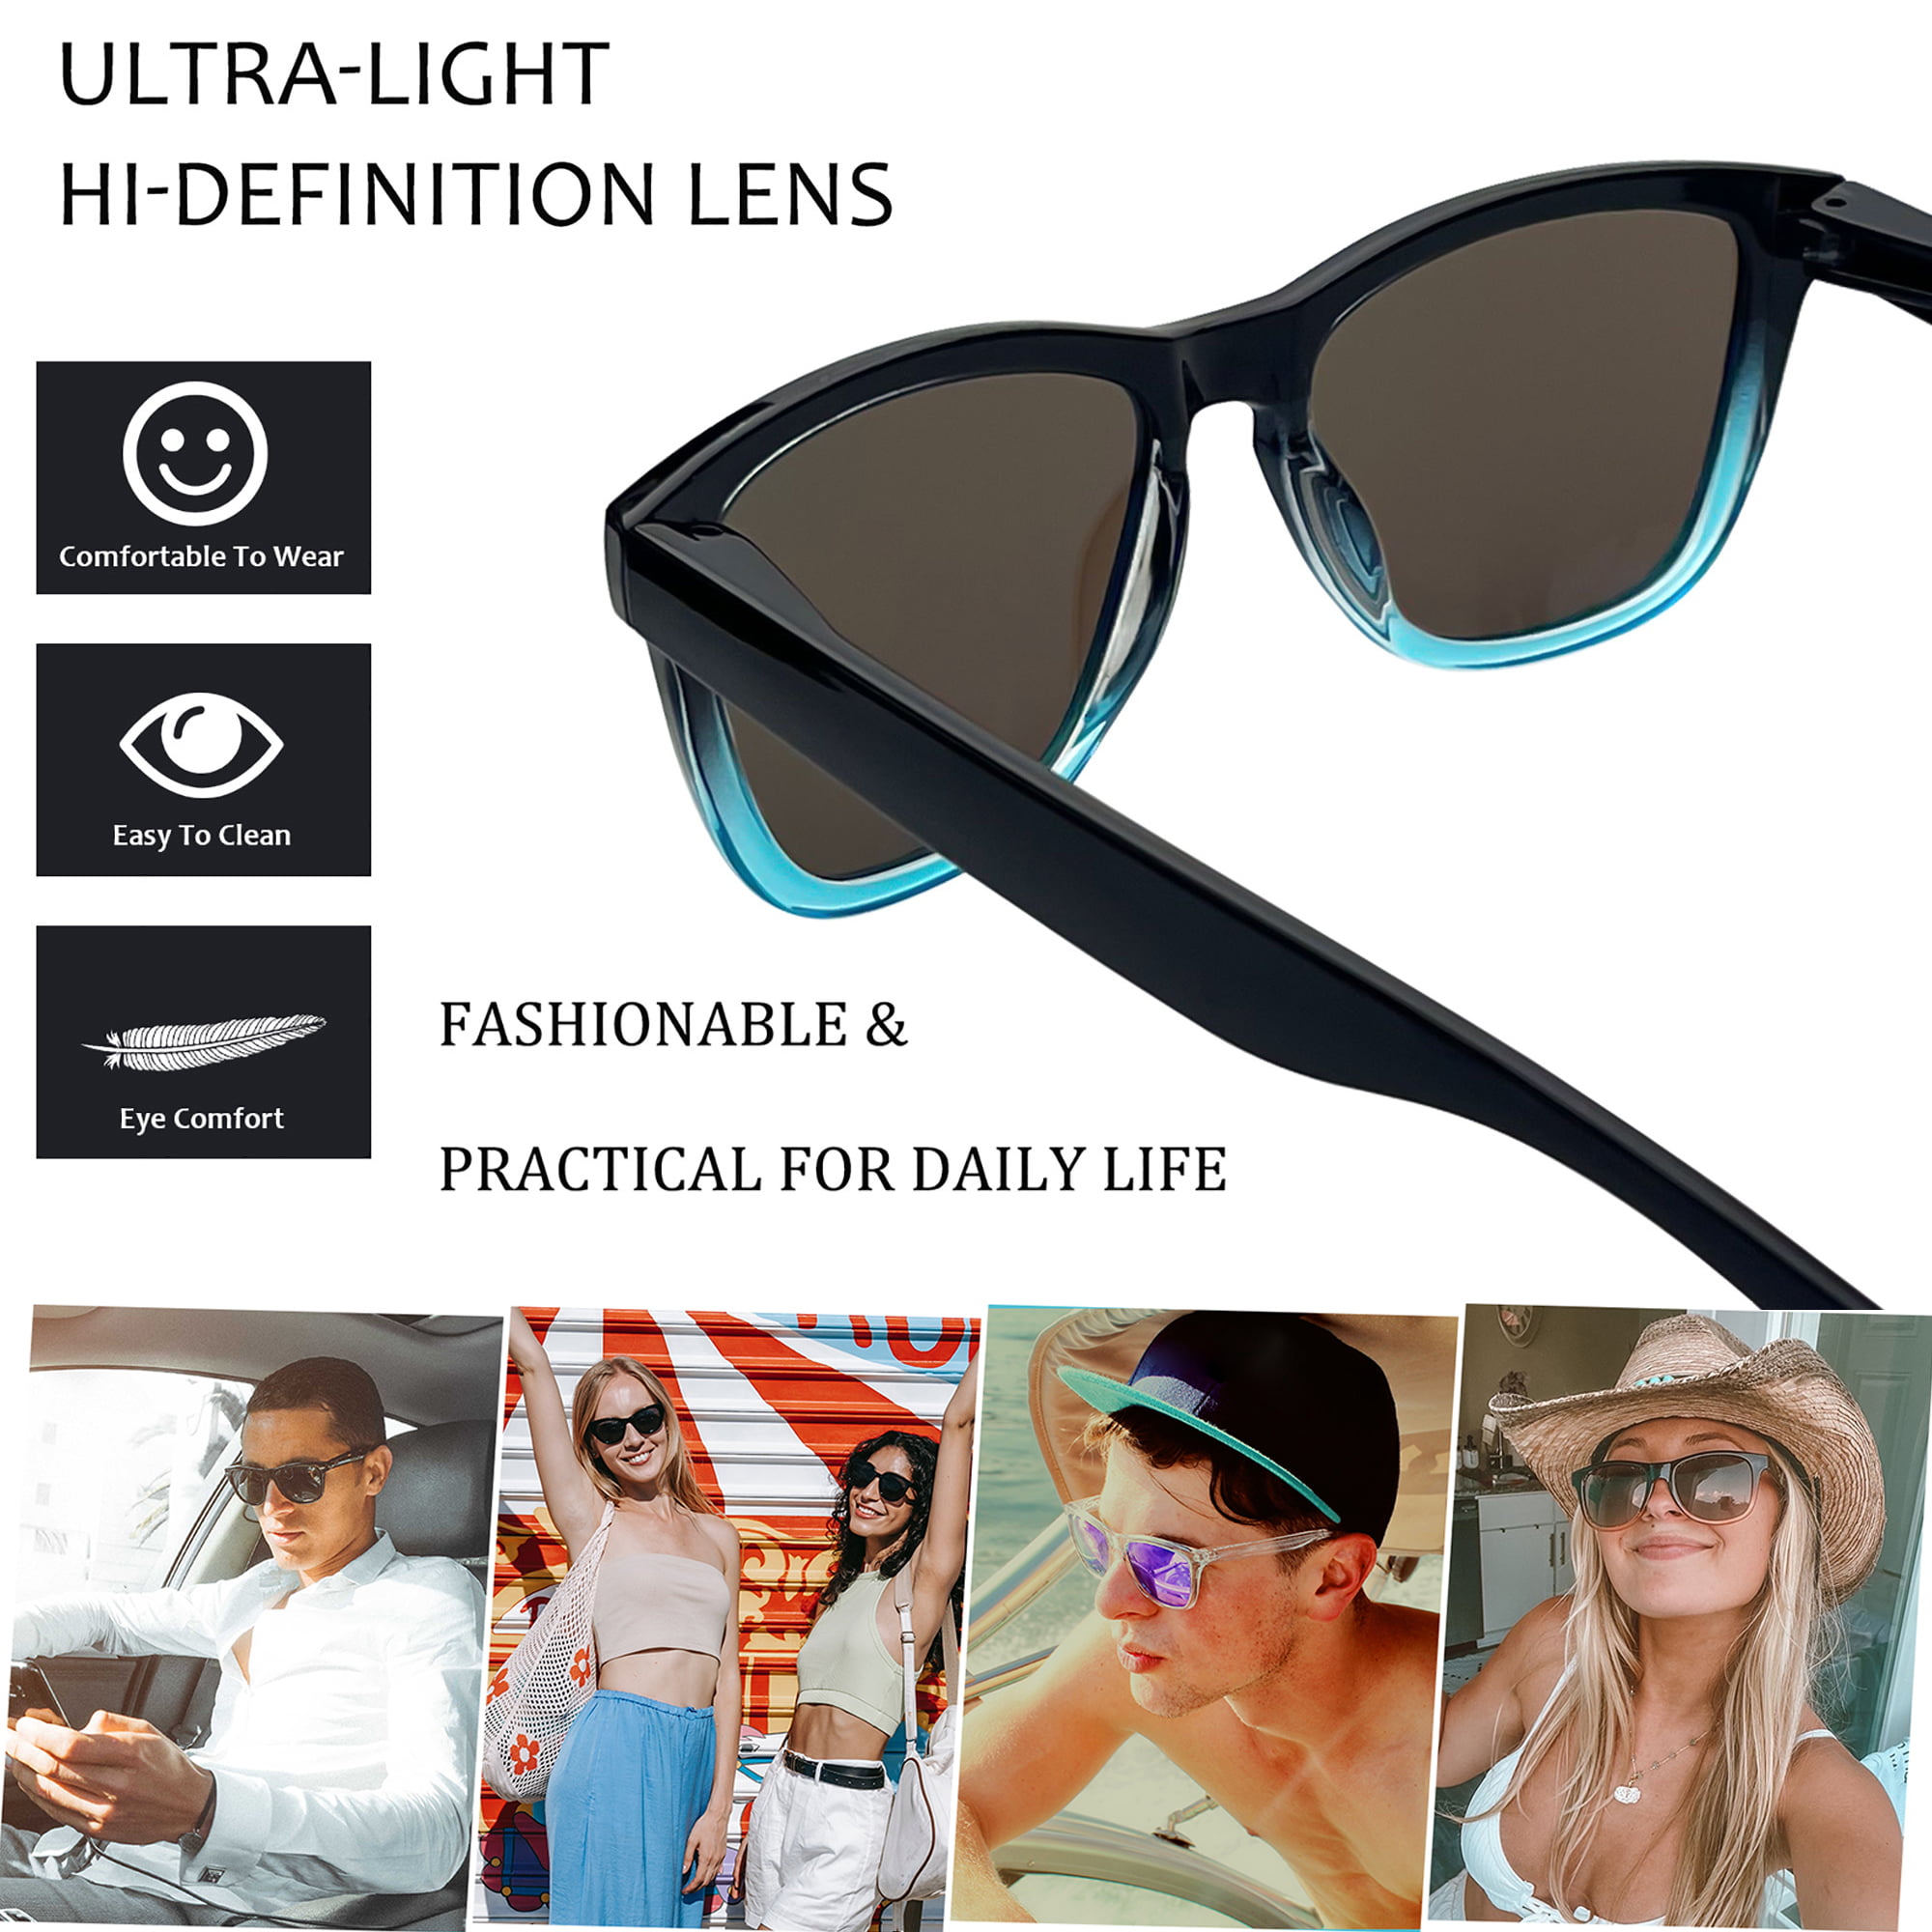 Joopin Square Polarized Sunglasses for Men Women, Lightweight Rectangle  UV400 Mirrored Sport Sun Glasses (Ice Blue) 